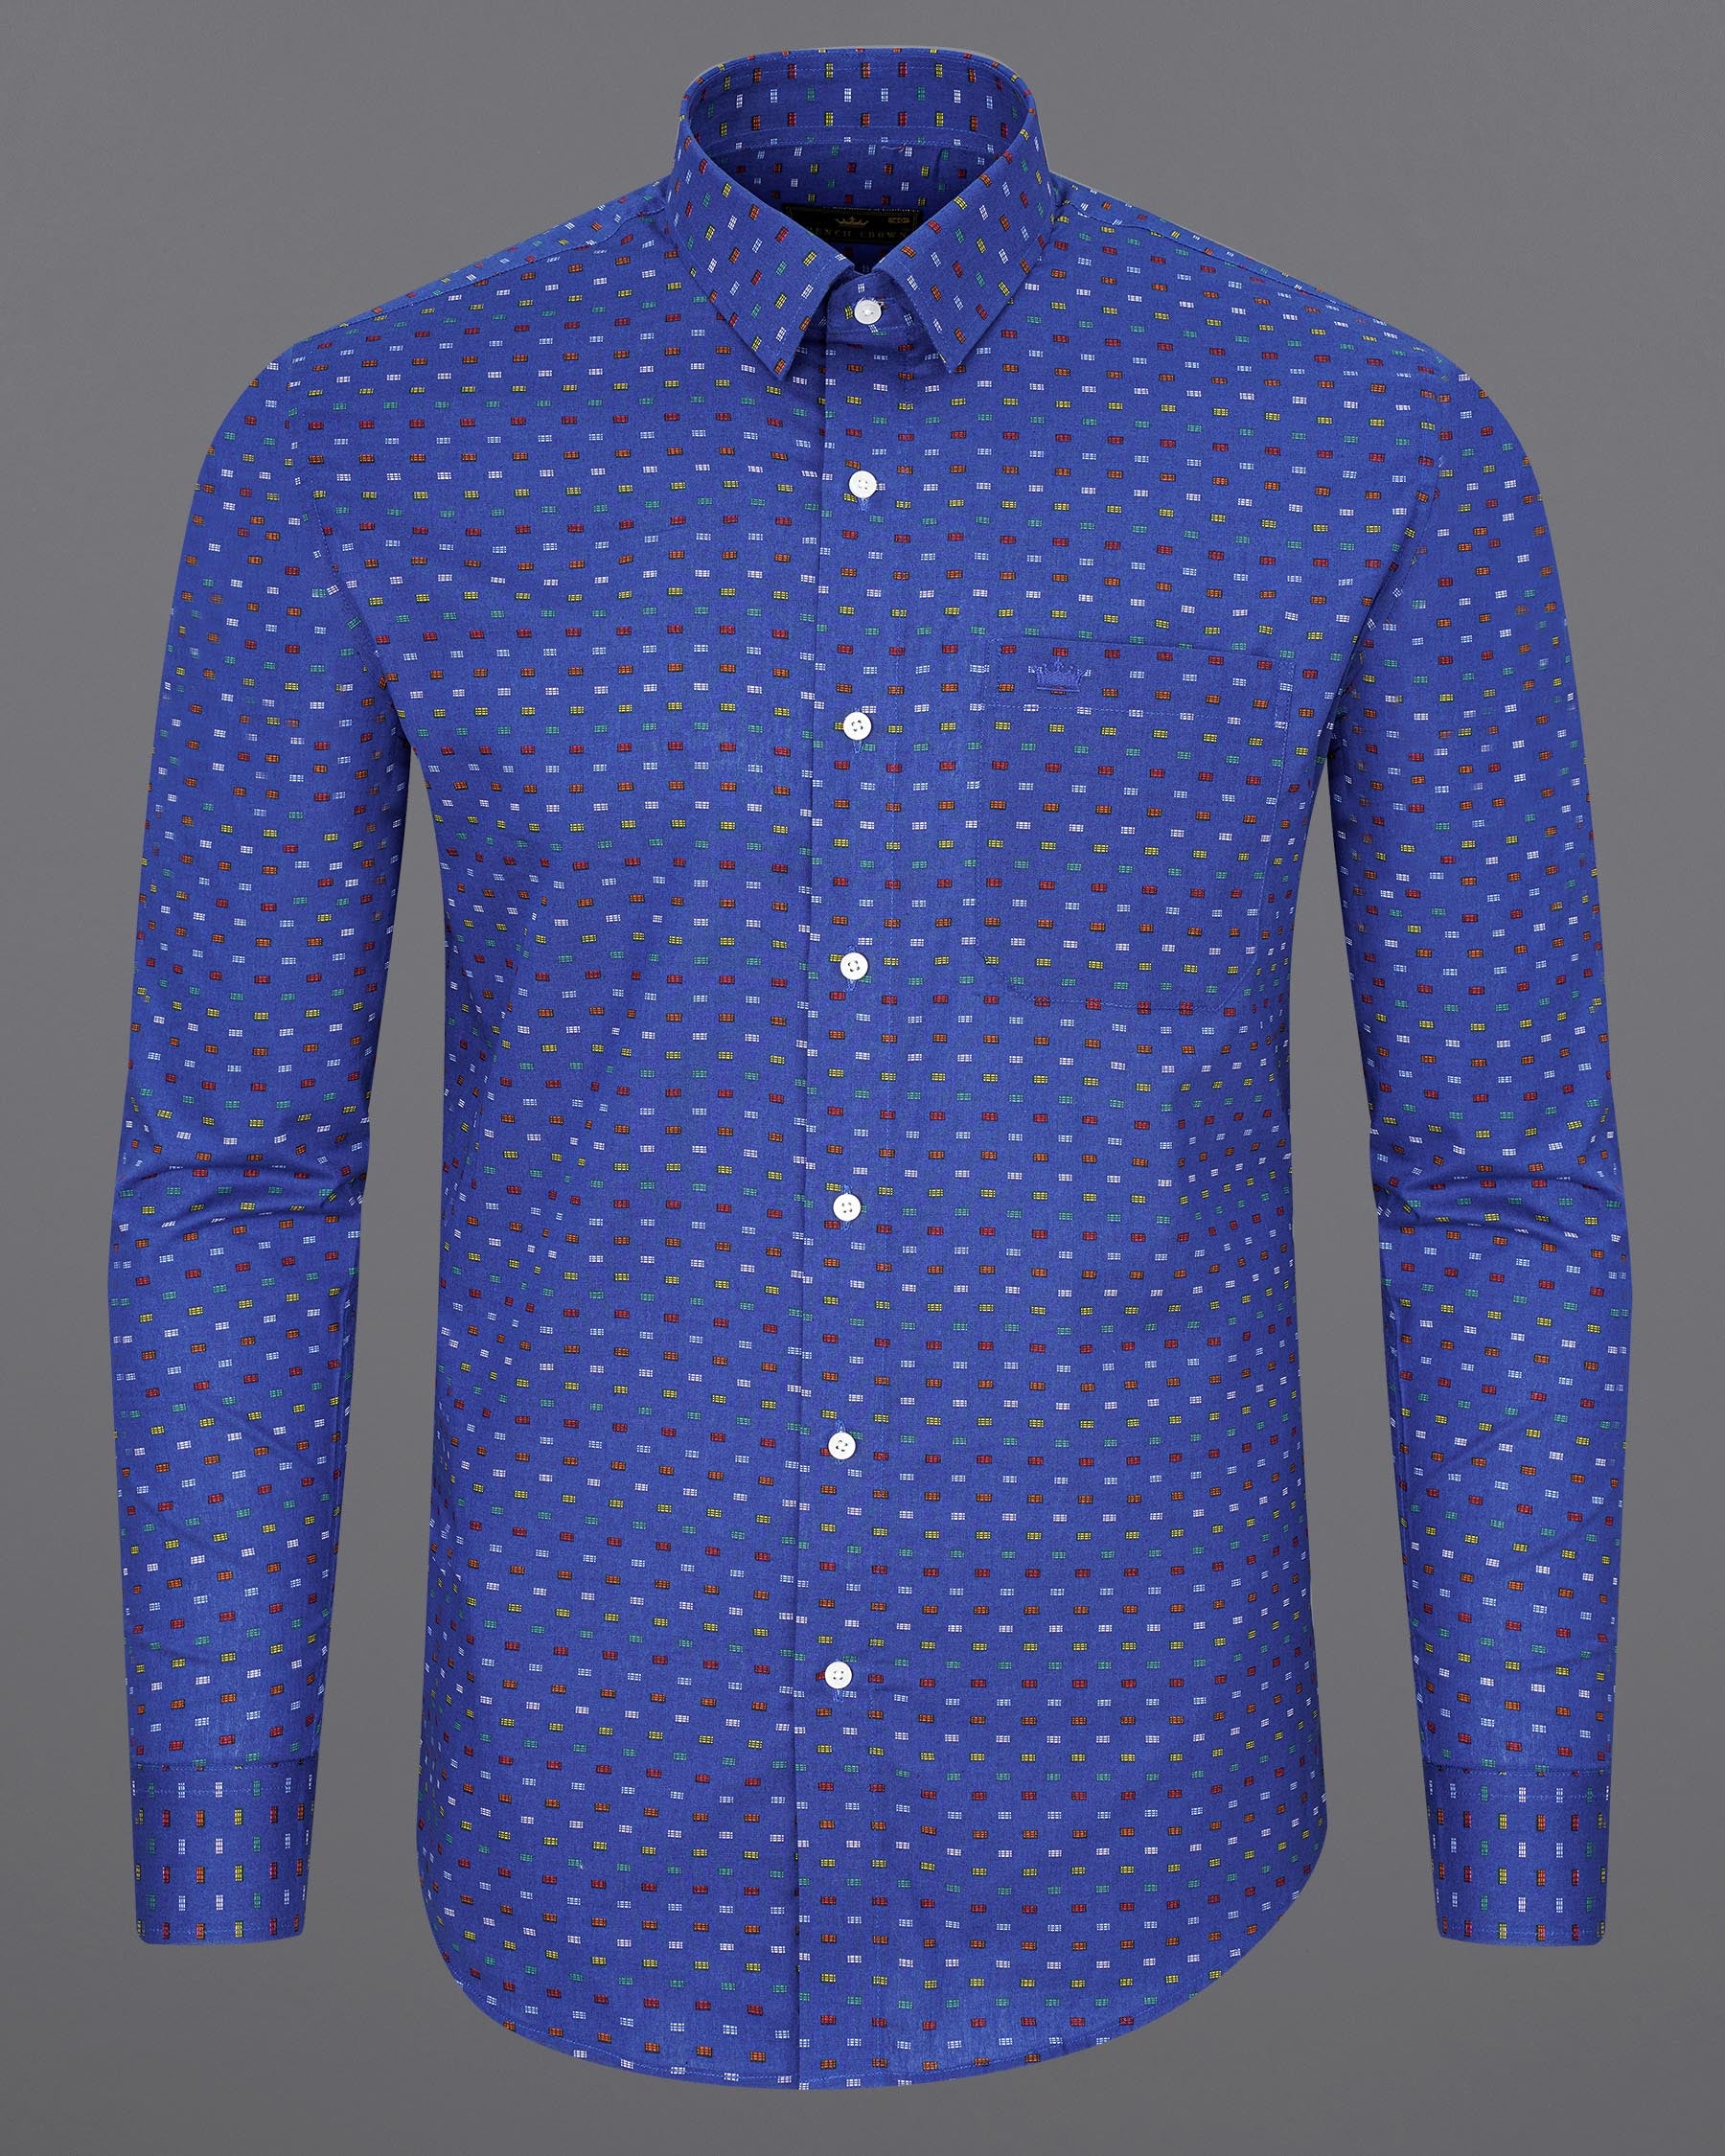 Chambray Blue with Multicolour Printed Premium Cotton Shirt  7466-38, 7466-H-38, 7466-39, 7466-H-39, 7466-40, 7466-H-40, 7466-42, 7466-H-42, 7466-44, 7466-H-44, 7466-46, 7466-H-46, 7466-48, 7466-H-48, 7466-50, 7466-H-50, 7466-52, 7466-H-52